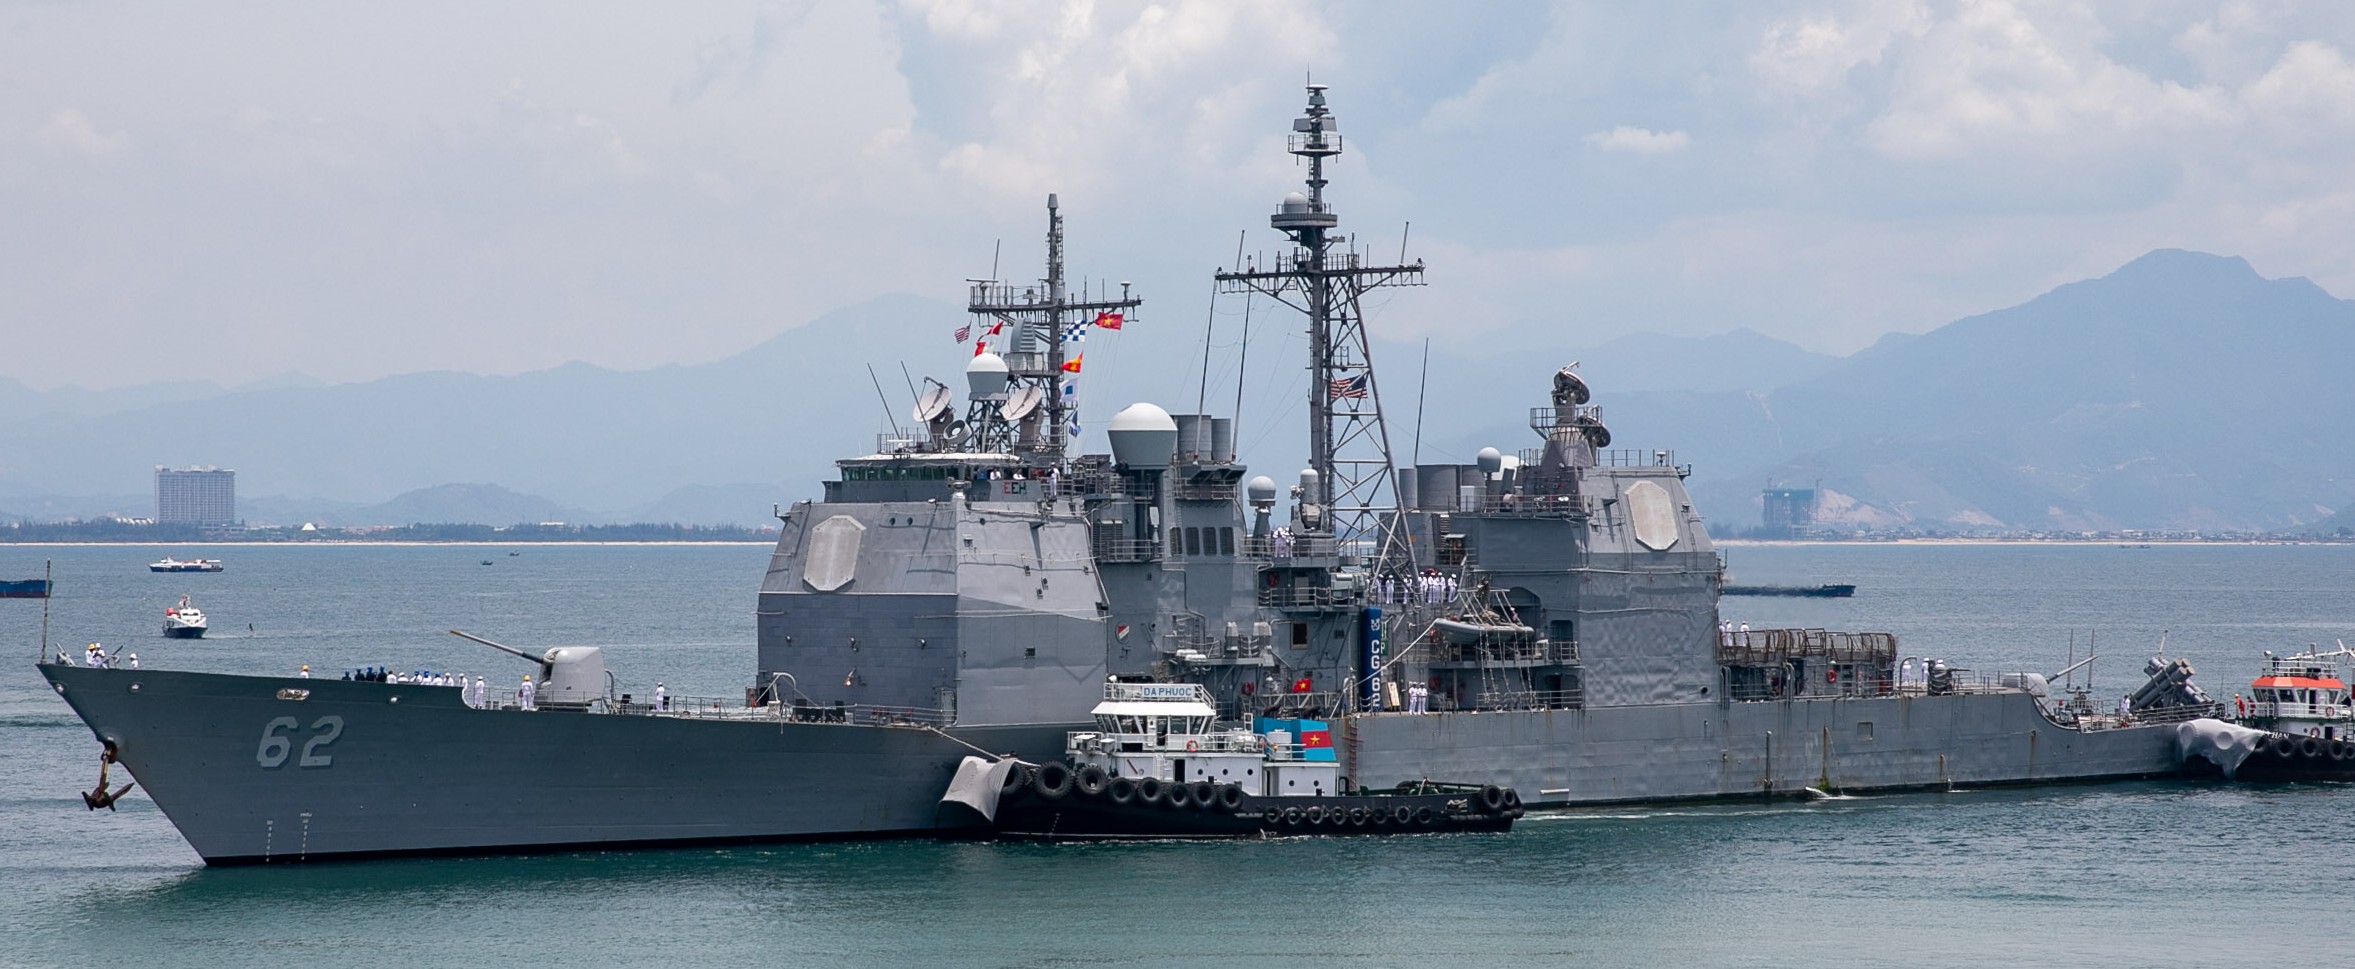 cg-62 uss robert smalls ticonderoga class guided missile cruiser aegis us navy da nang vietnam 05